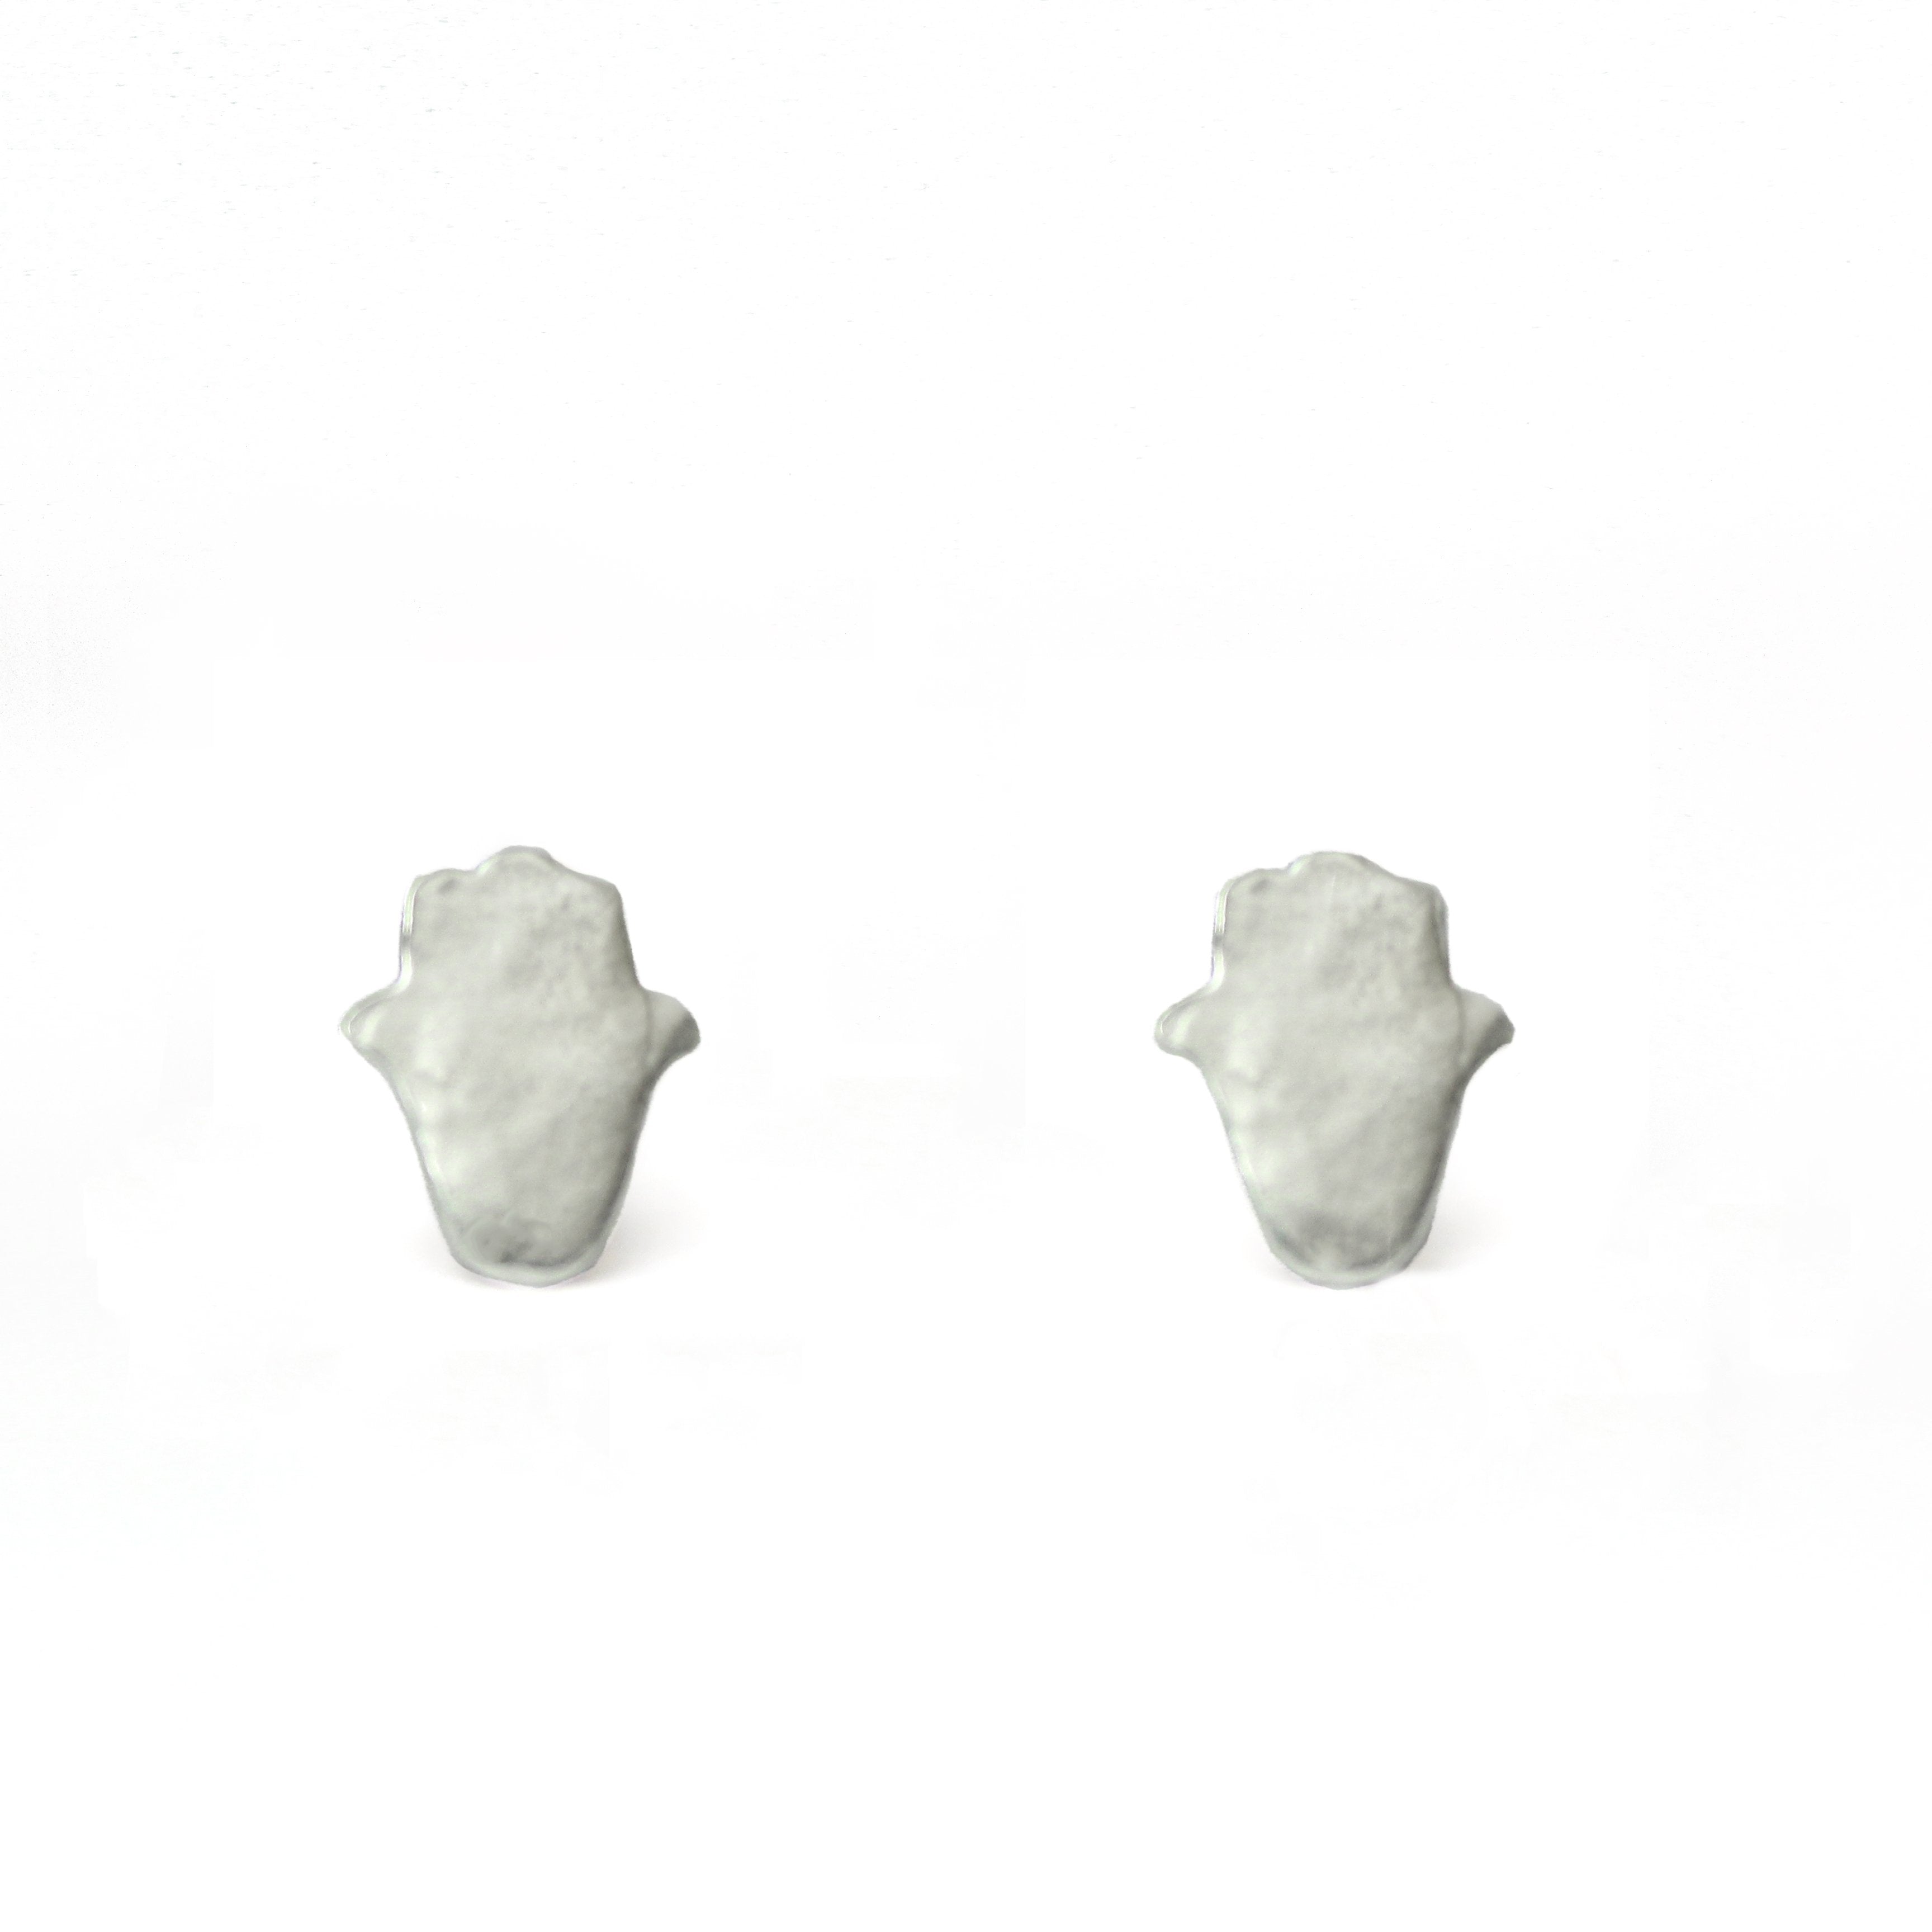 Hamsa Silver Pierce Earrings - Shulamit Kanter